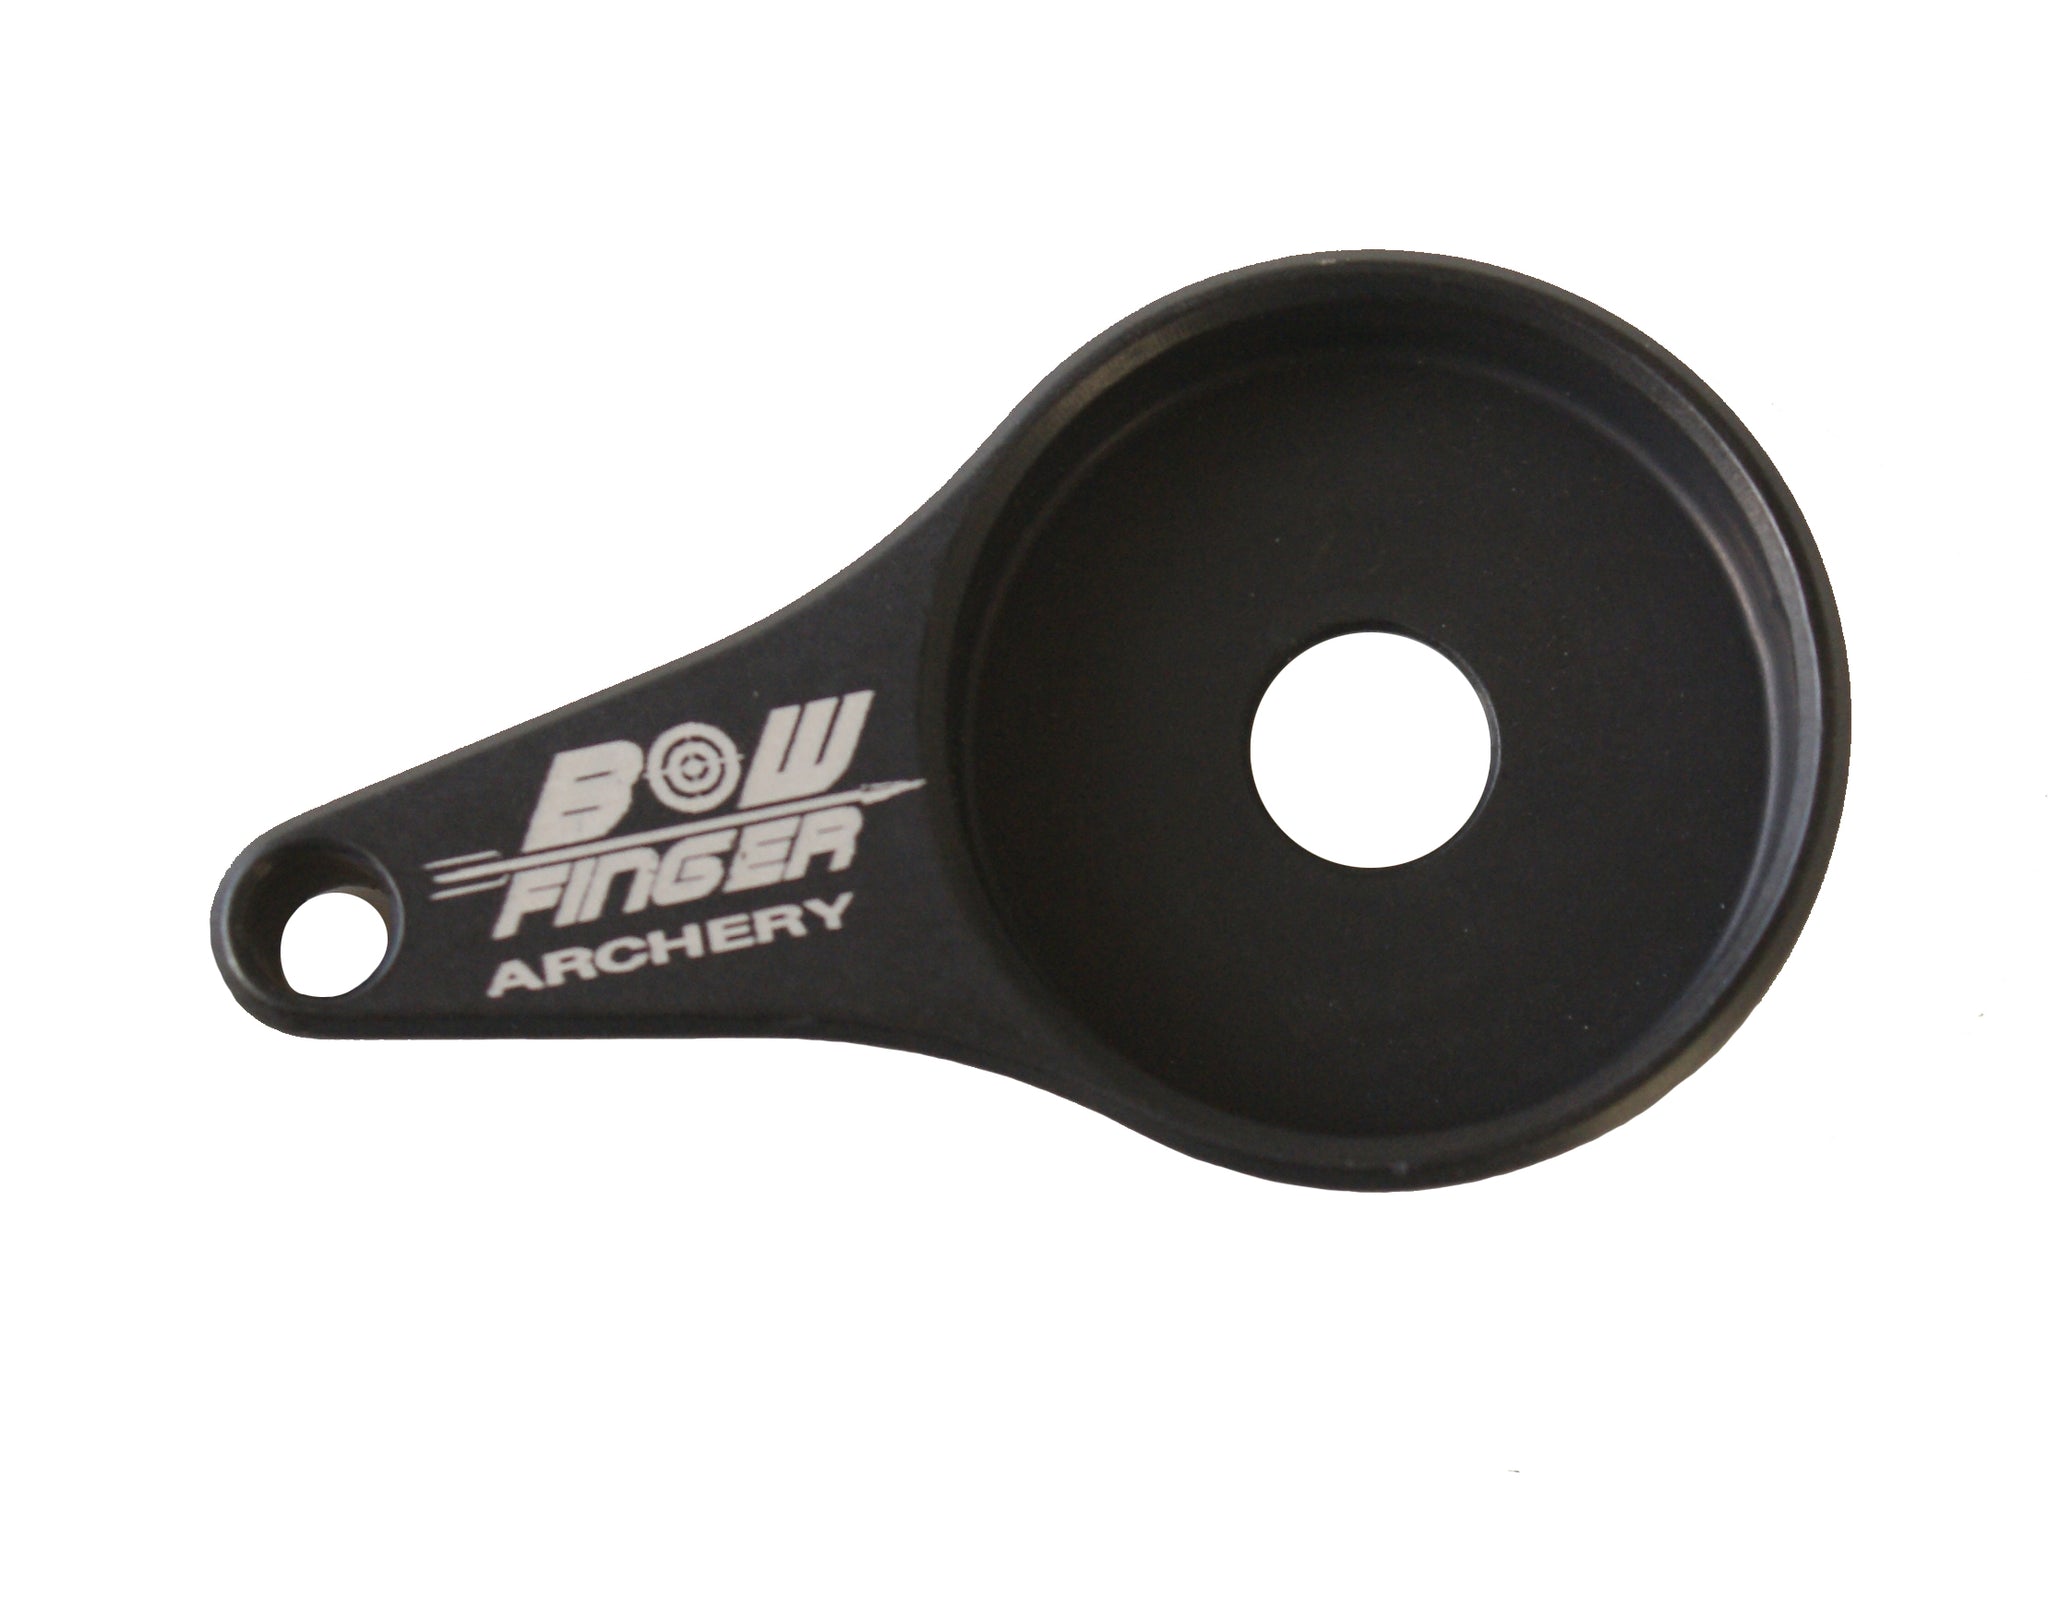 PIN LOCK CLAMP & SCOPE BARREL - Bowfinger Archery Inc